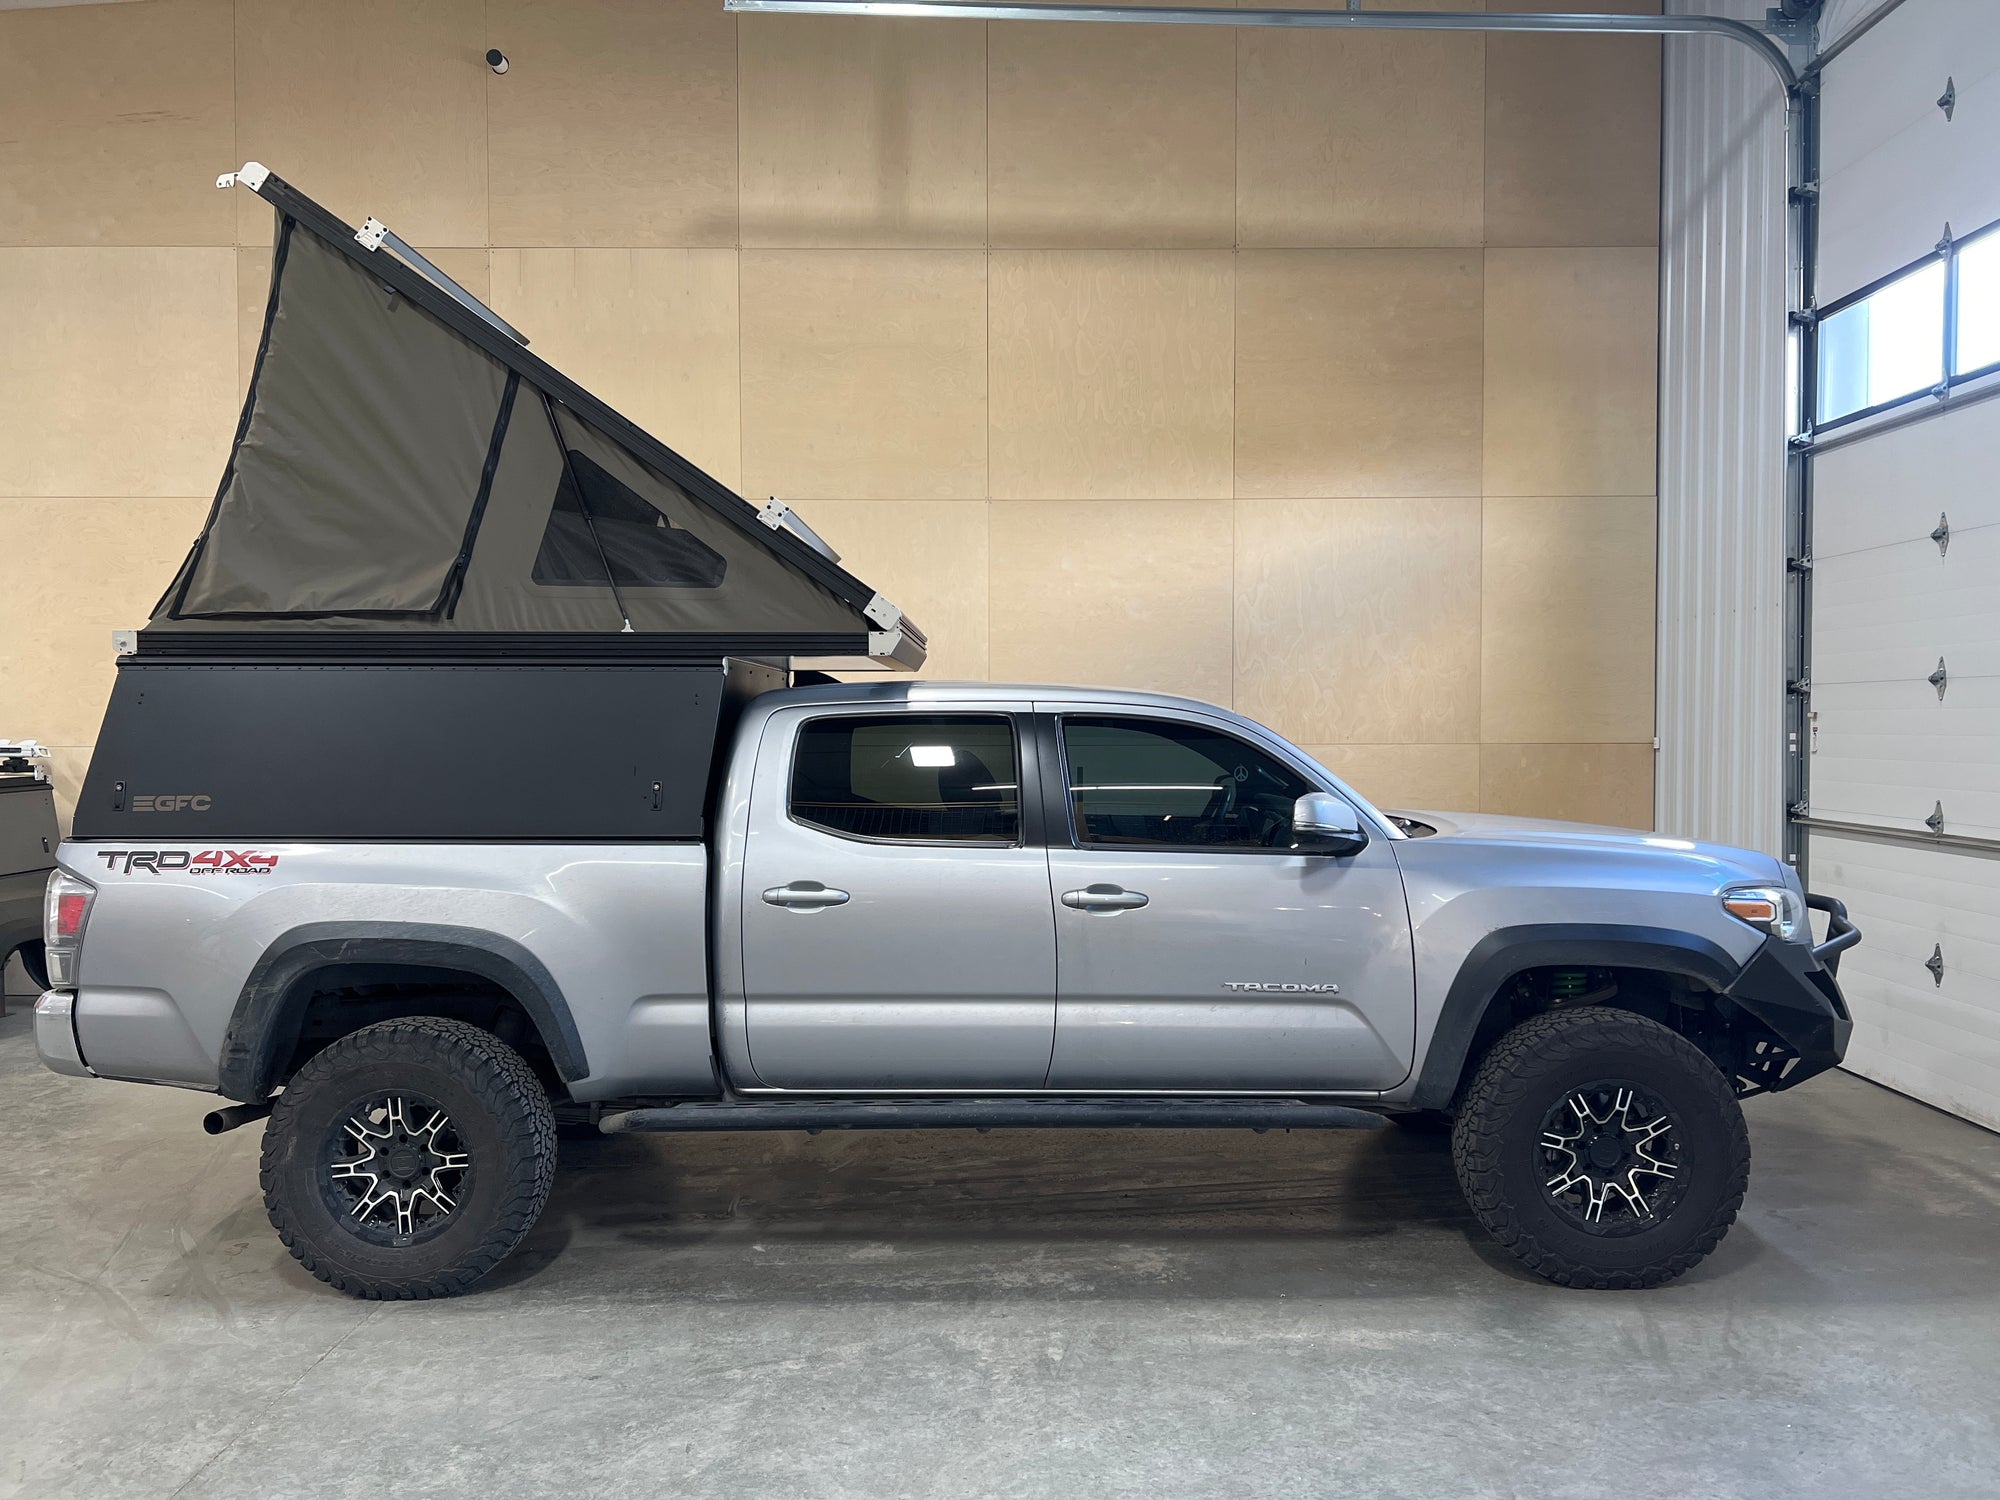 2020 Toyota Tacoma Camper - Build #5008